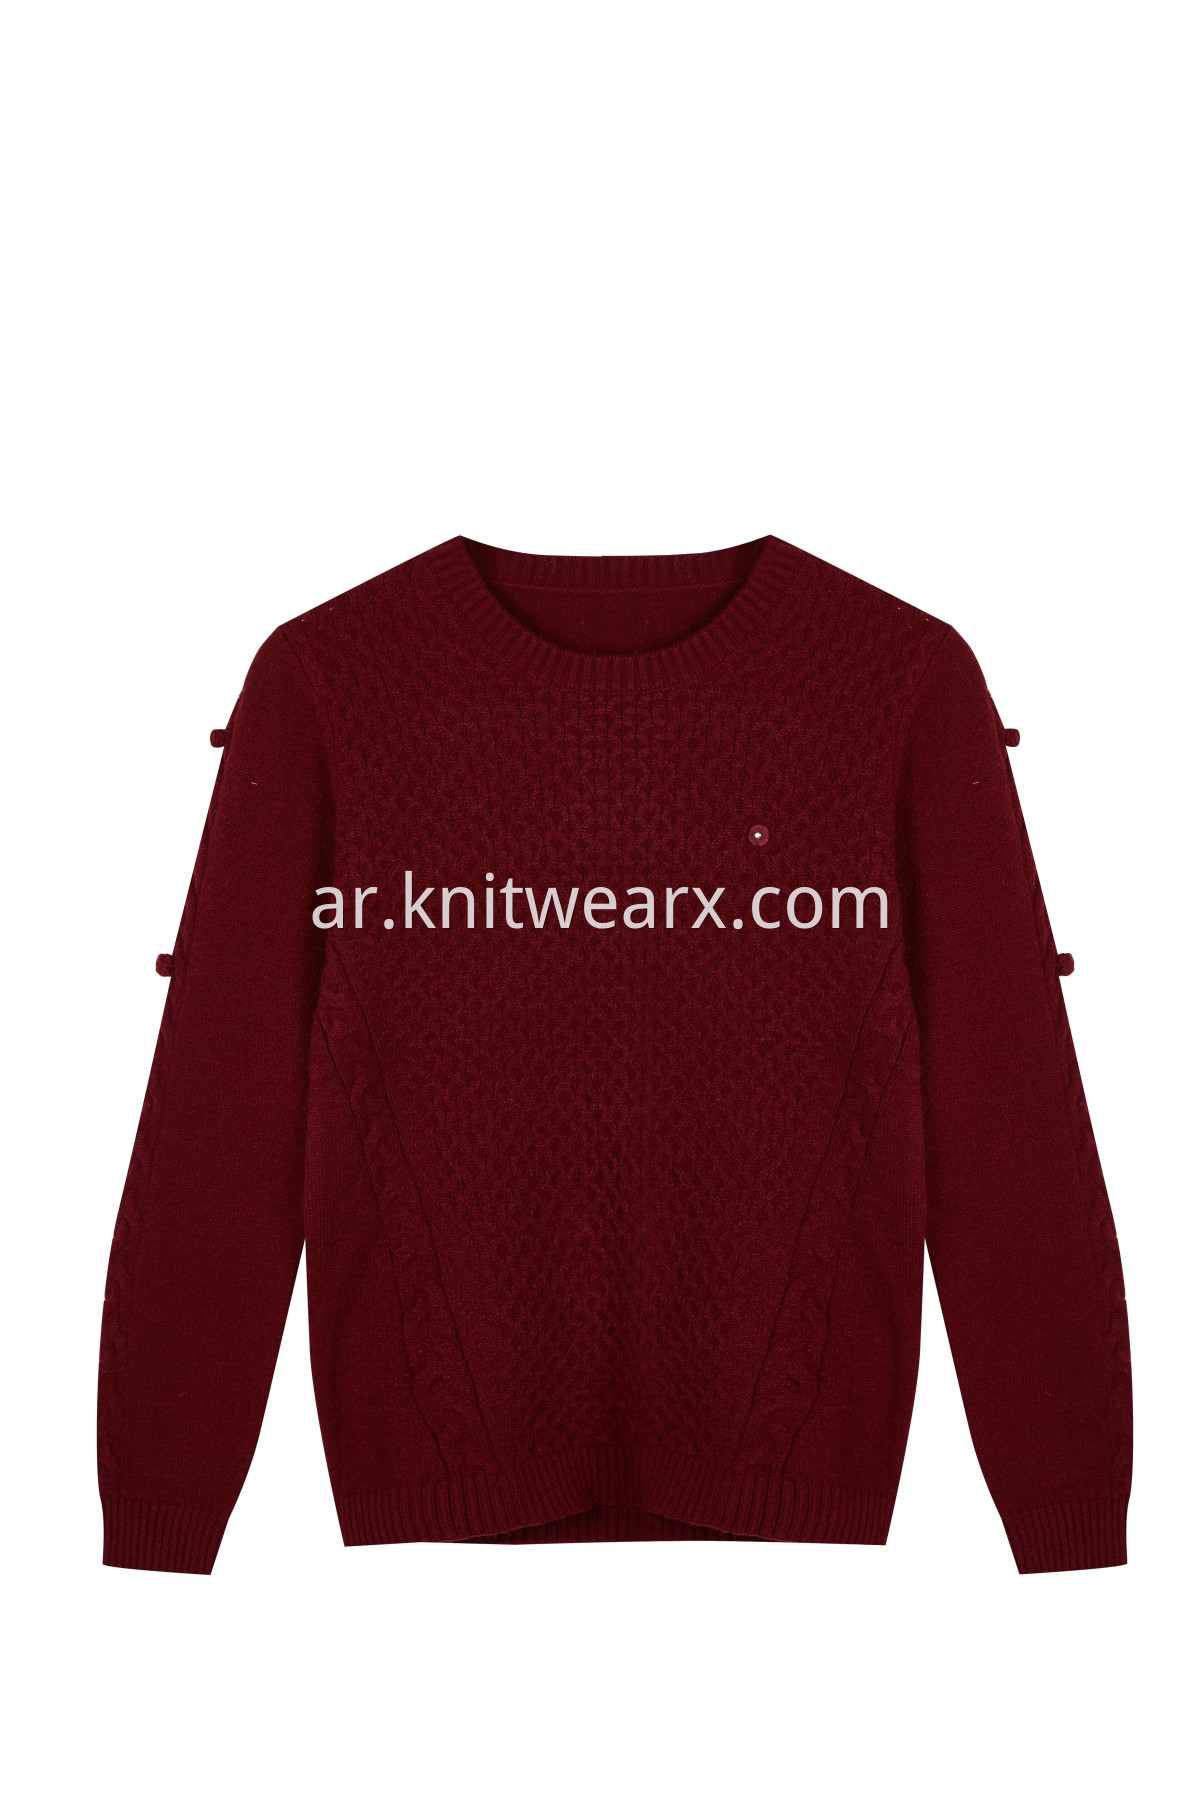 Girl's Crochet Ball Sweater Honey Comb Texture Crew Neck Sweater Long Sleeve Top